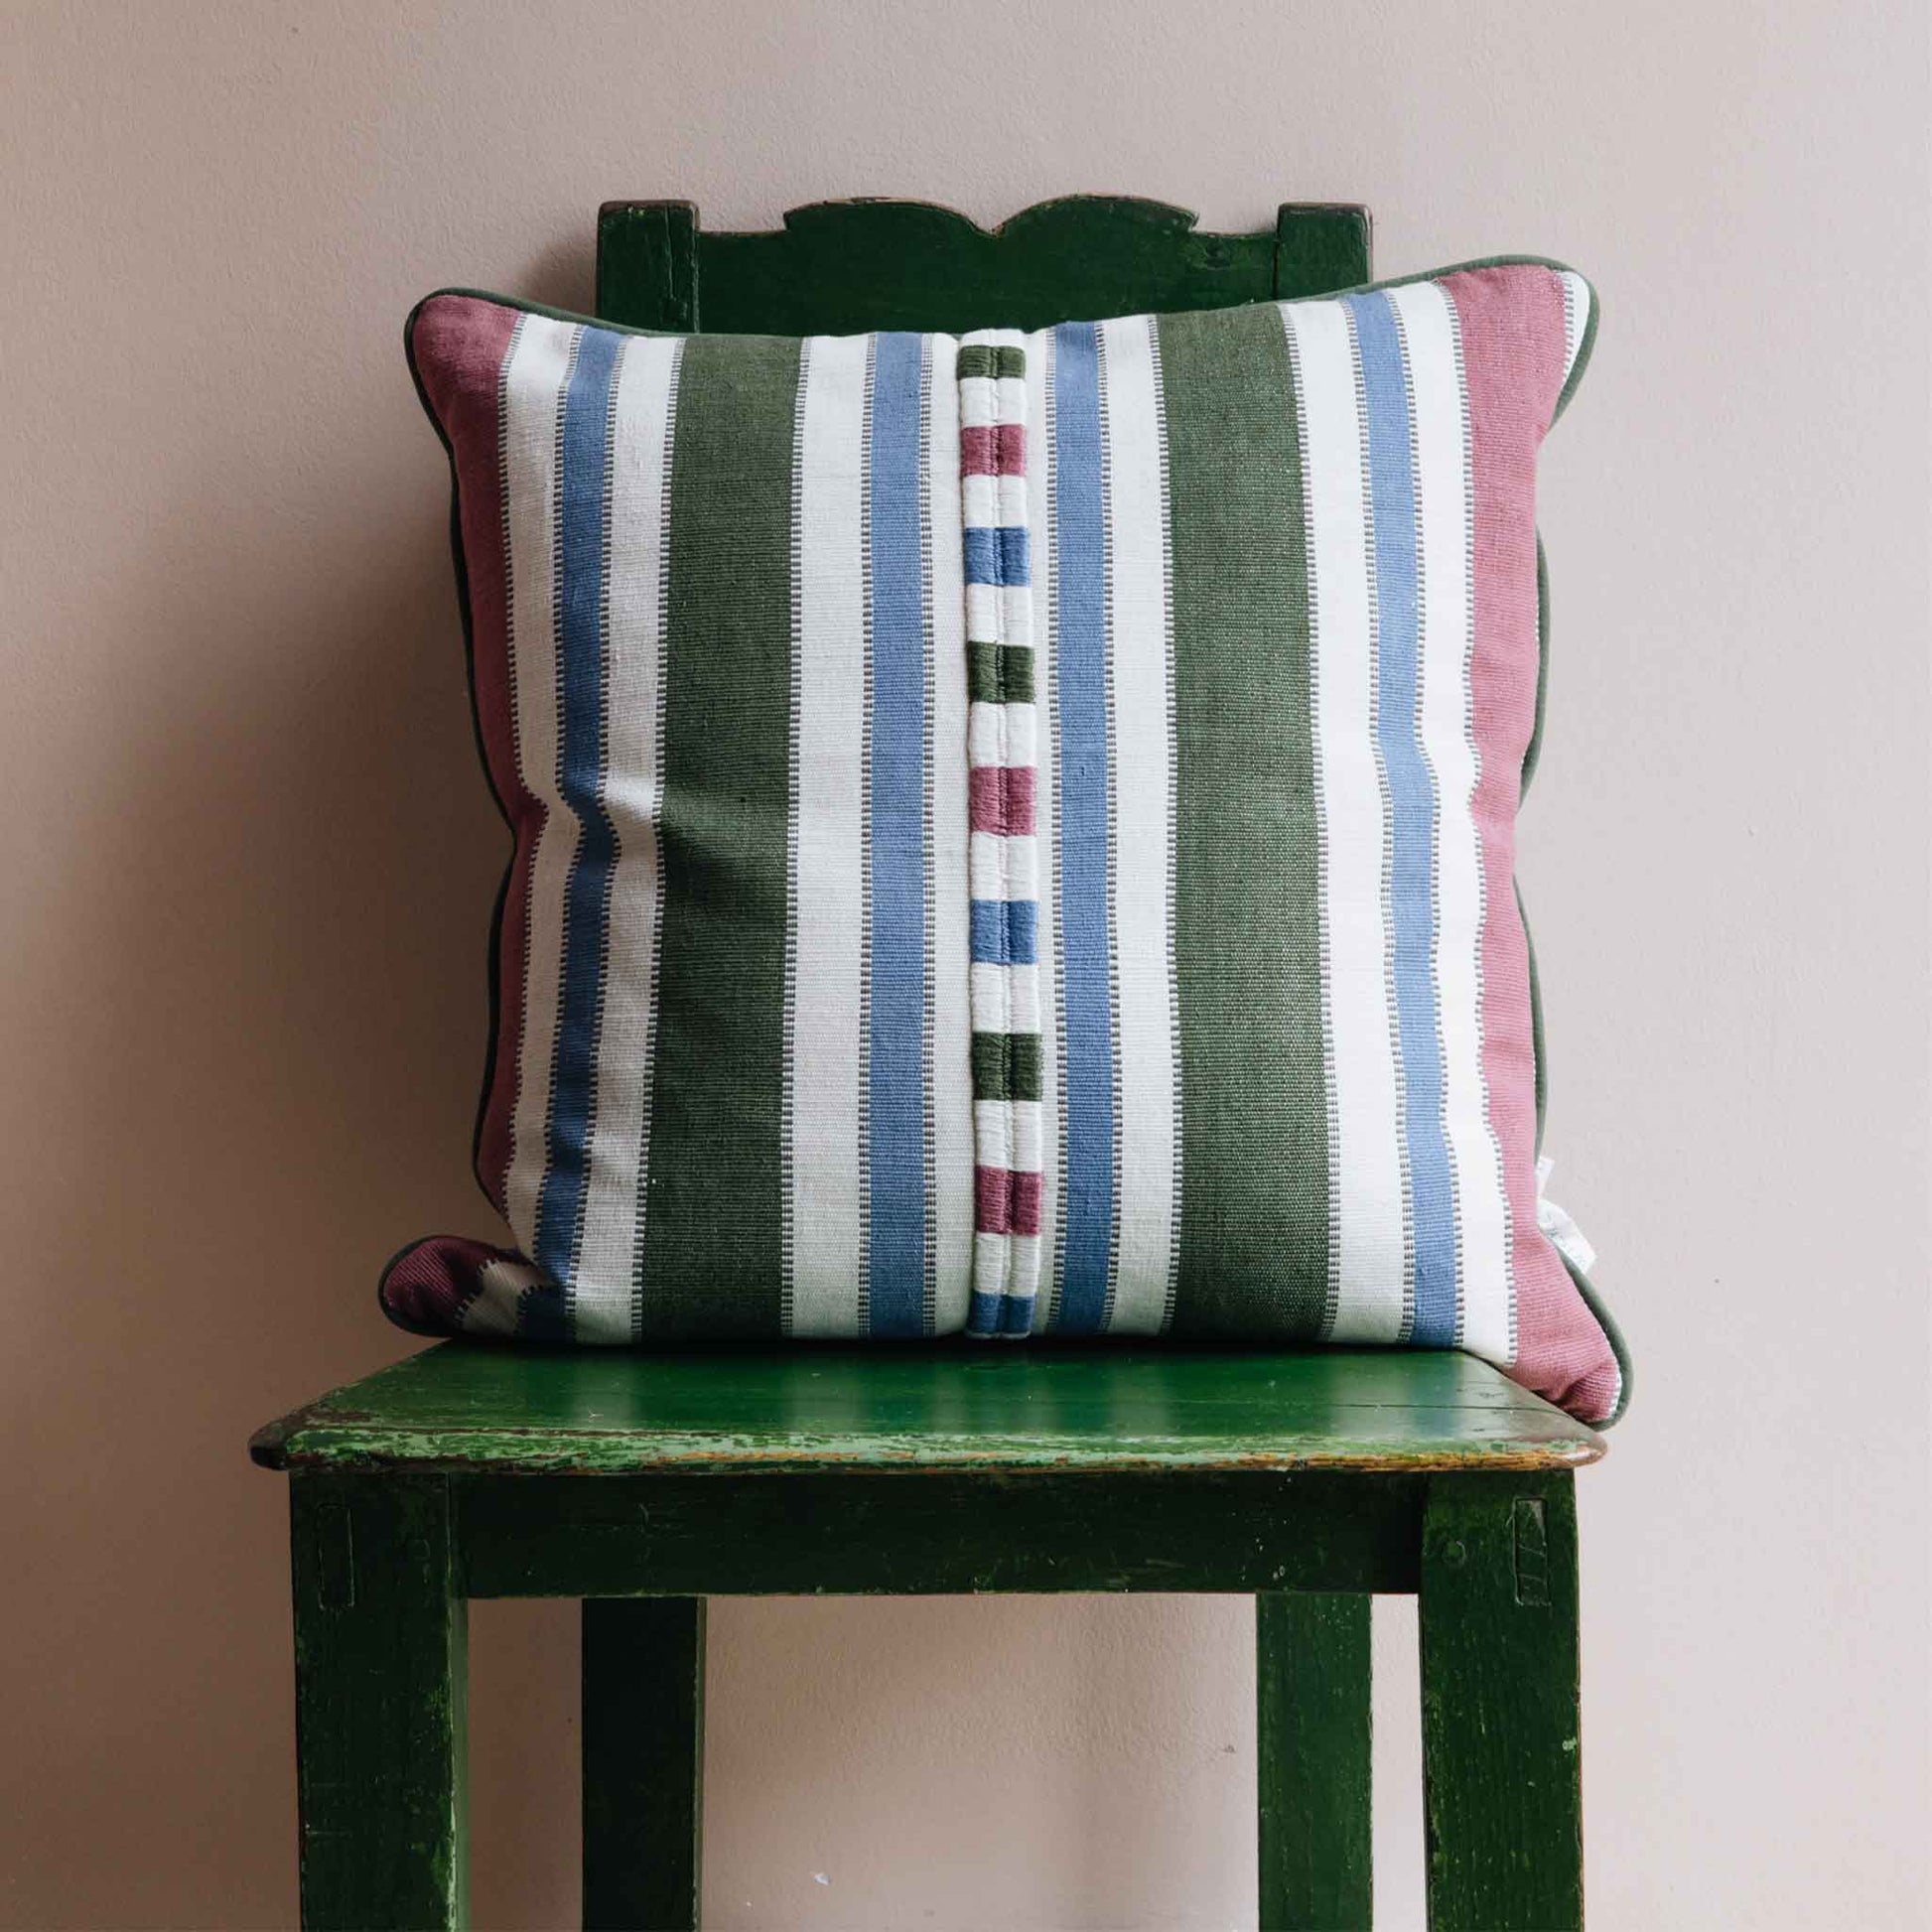 raya guatemalan stripe square cushion pink green blue